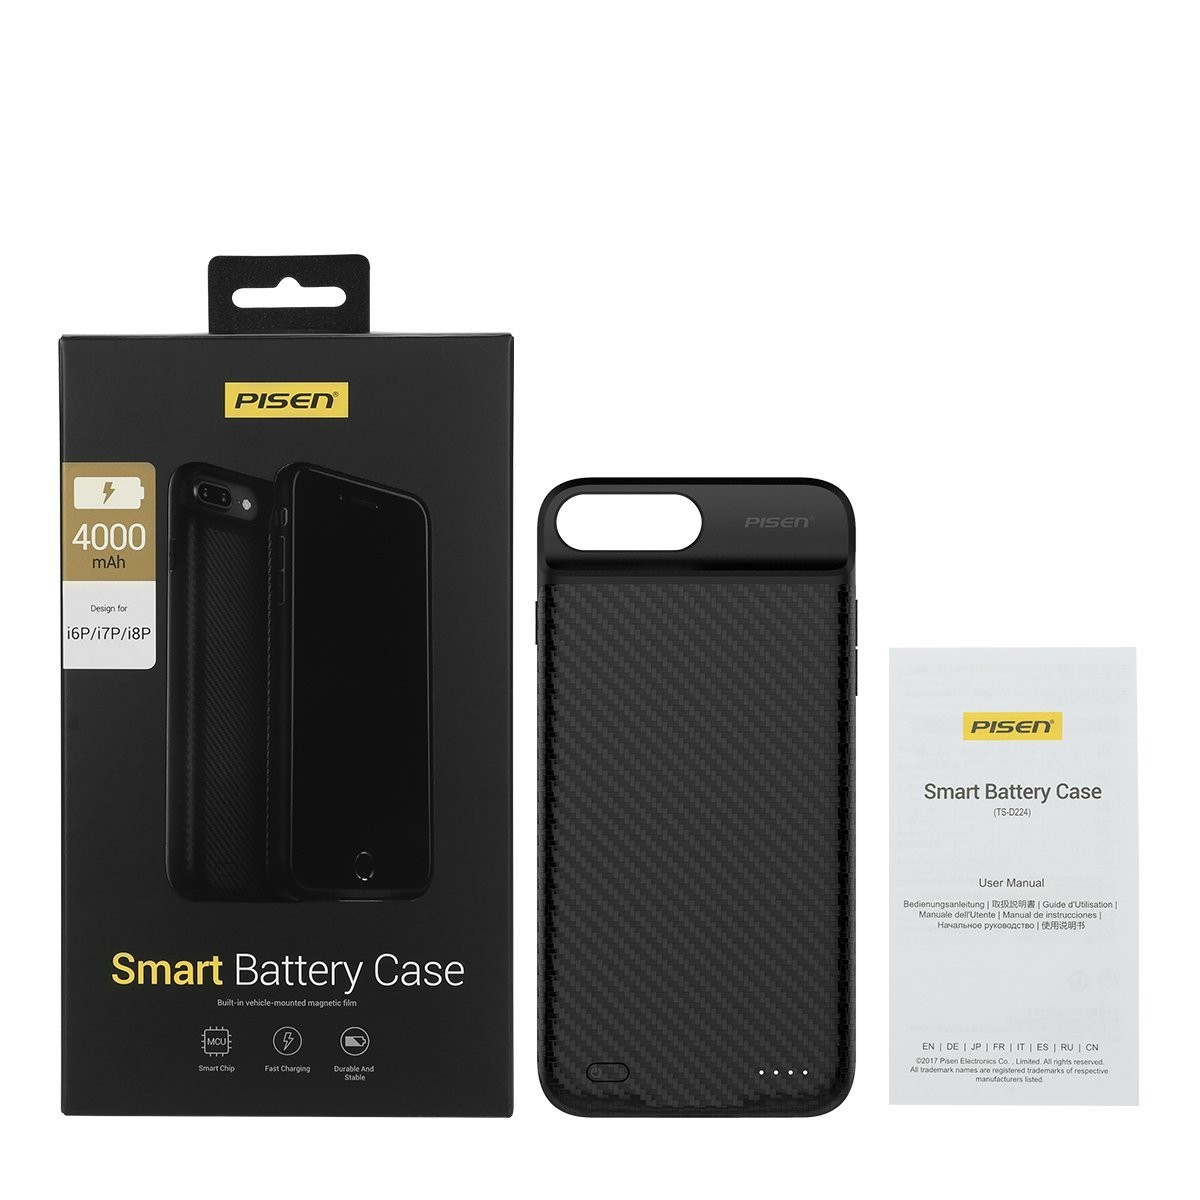 Pisen Smart Battery Case for iPhone 6P/7P/8P, 4000mAh